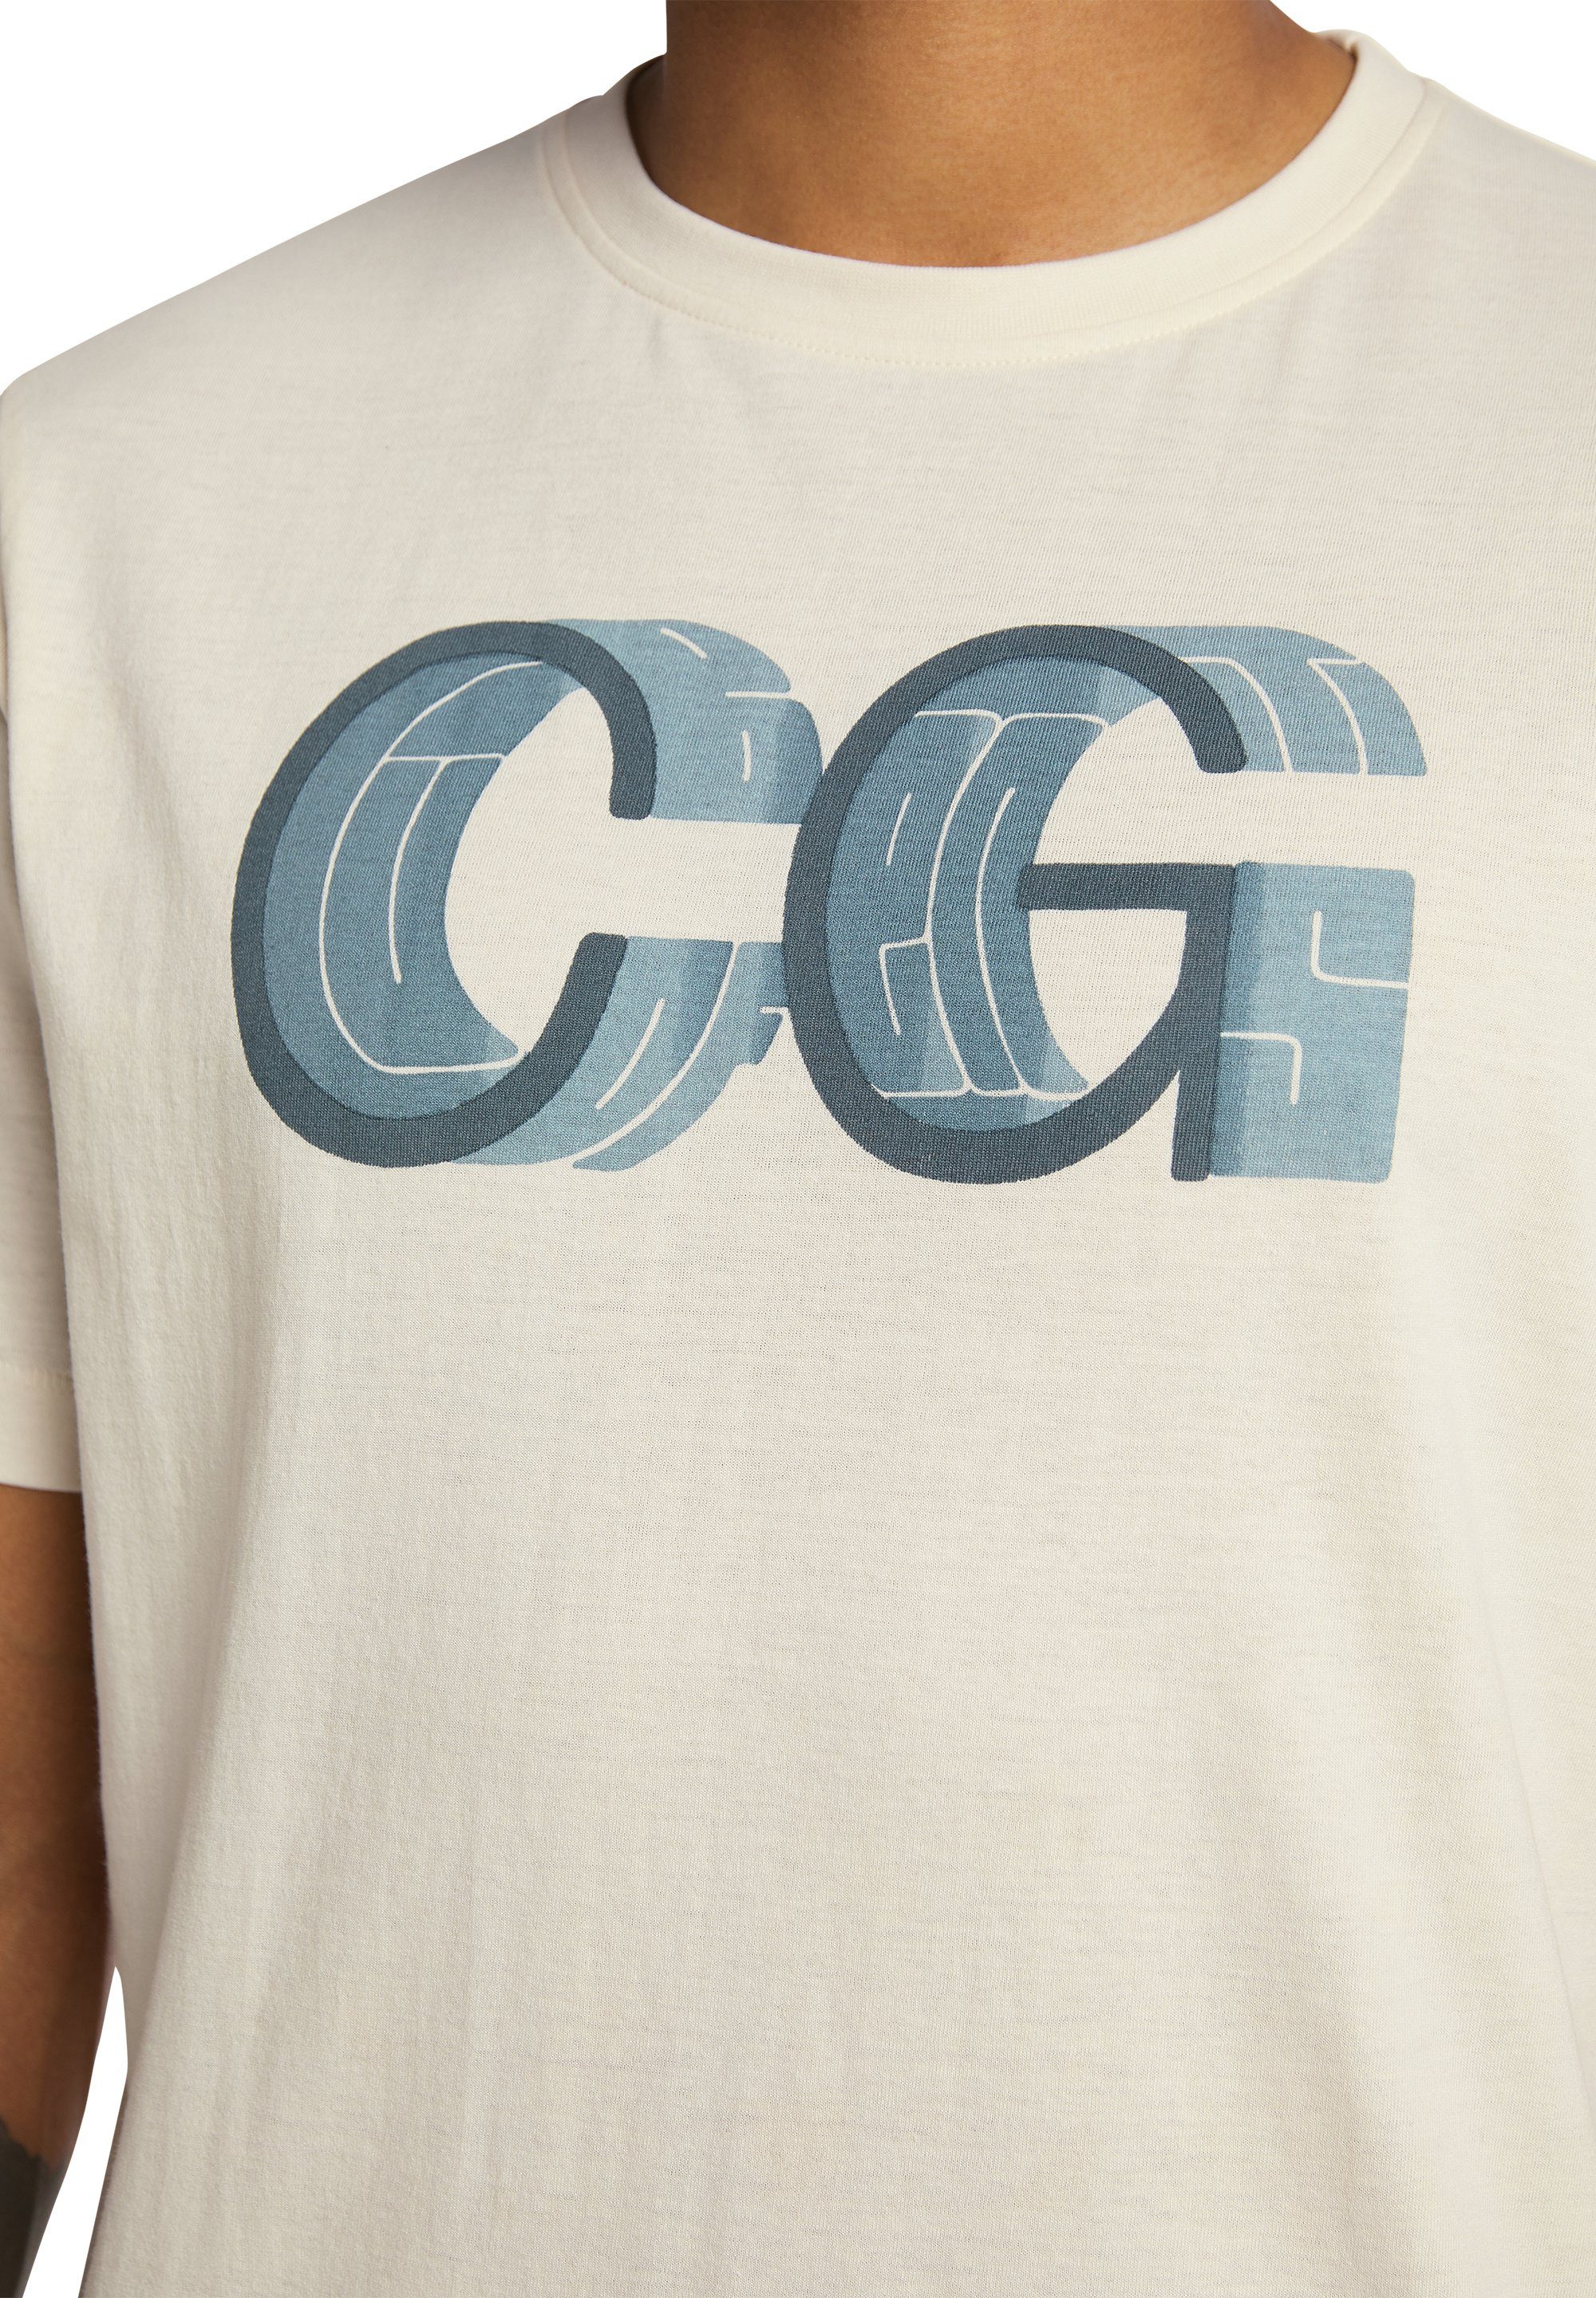 Gents T-Shirt Hellbeige Club of CG Benter CG